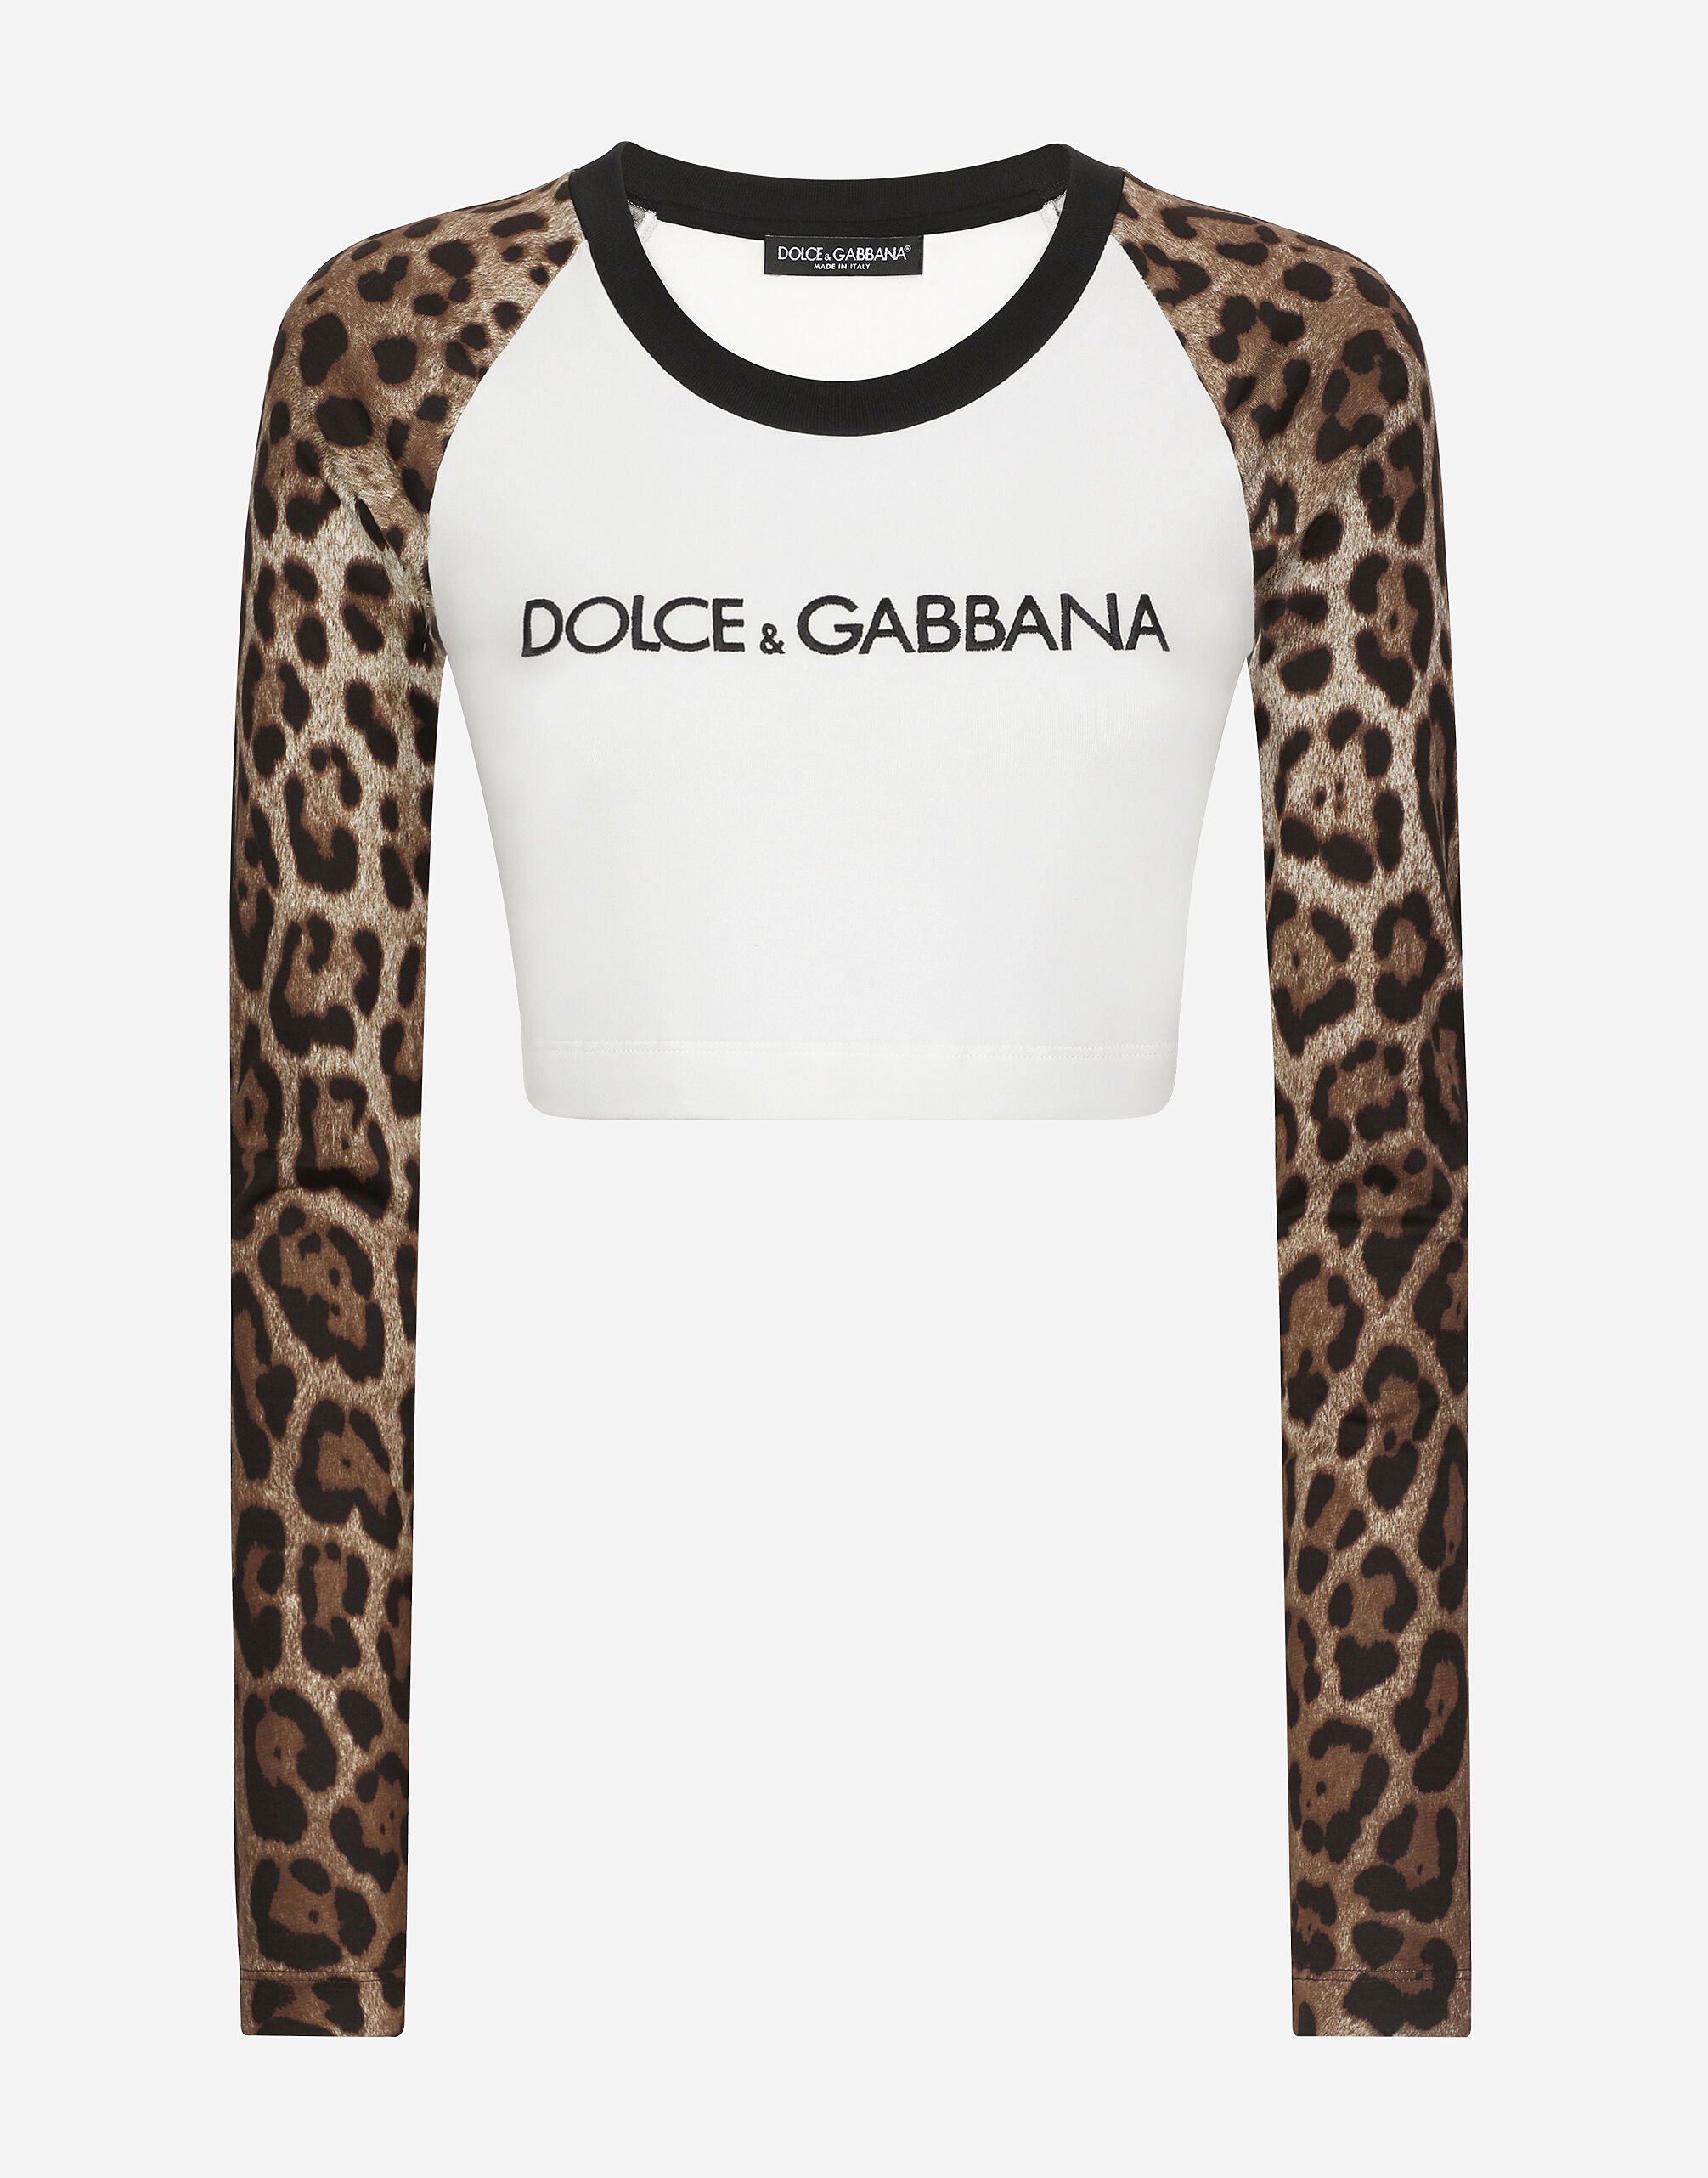 Dolce&Gabbana Long-sleeved T-shirt with Dolce&Gabbana logo Black F79BRTHLM9K